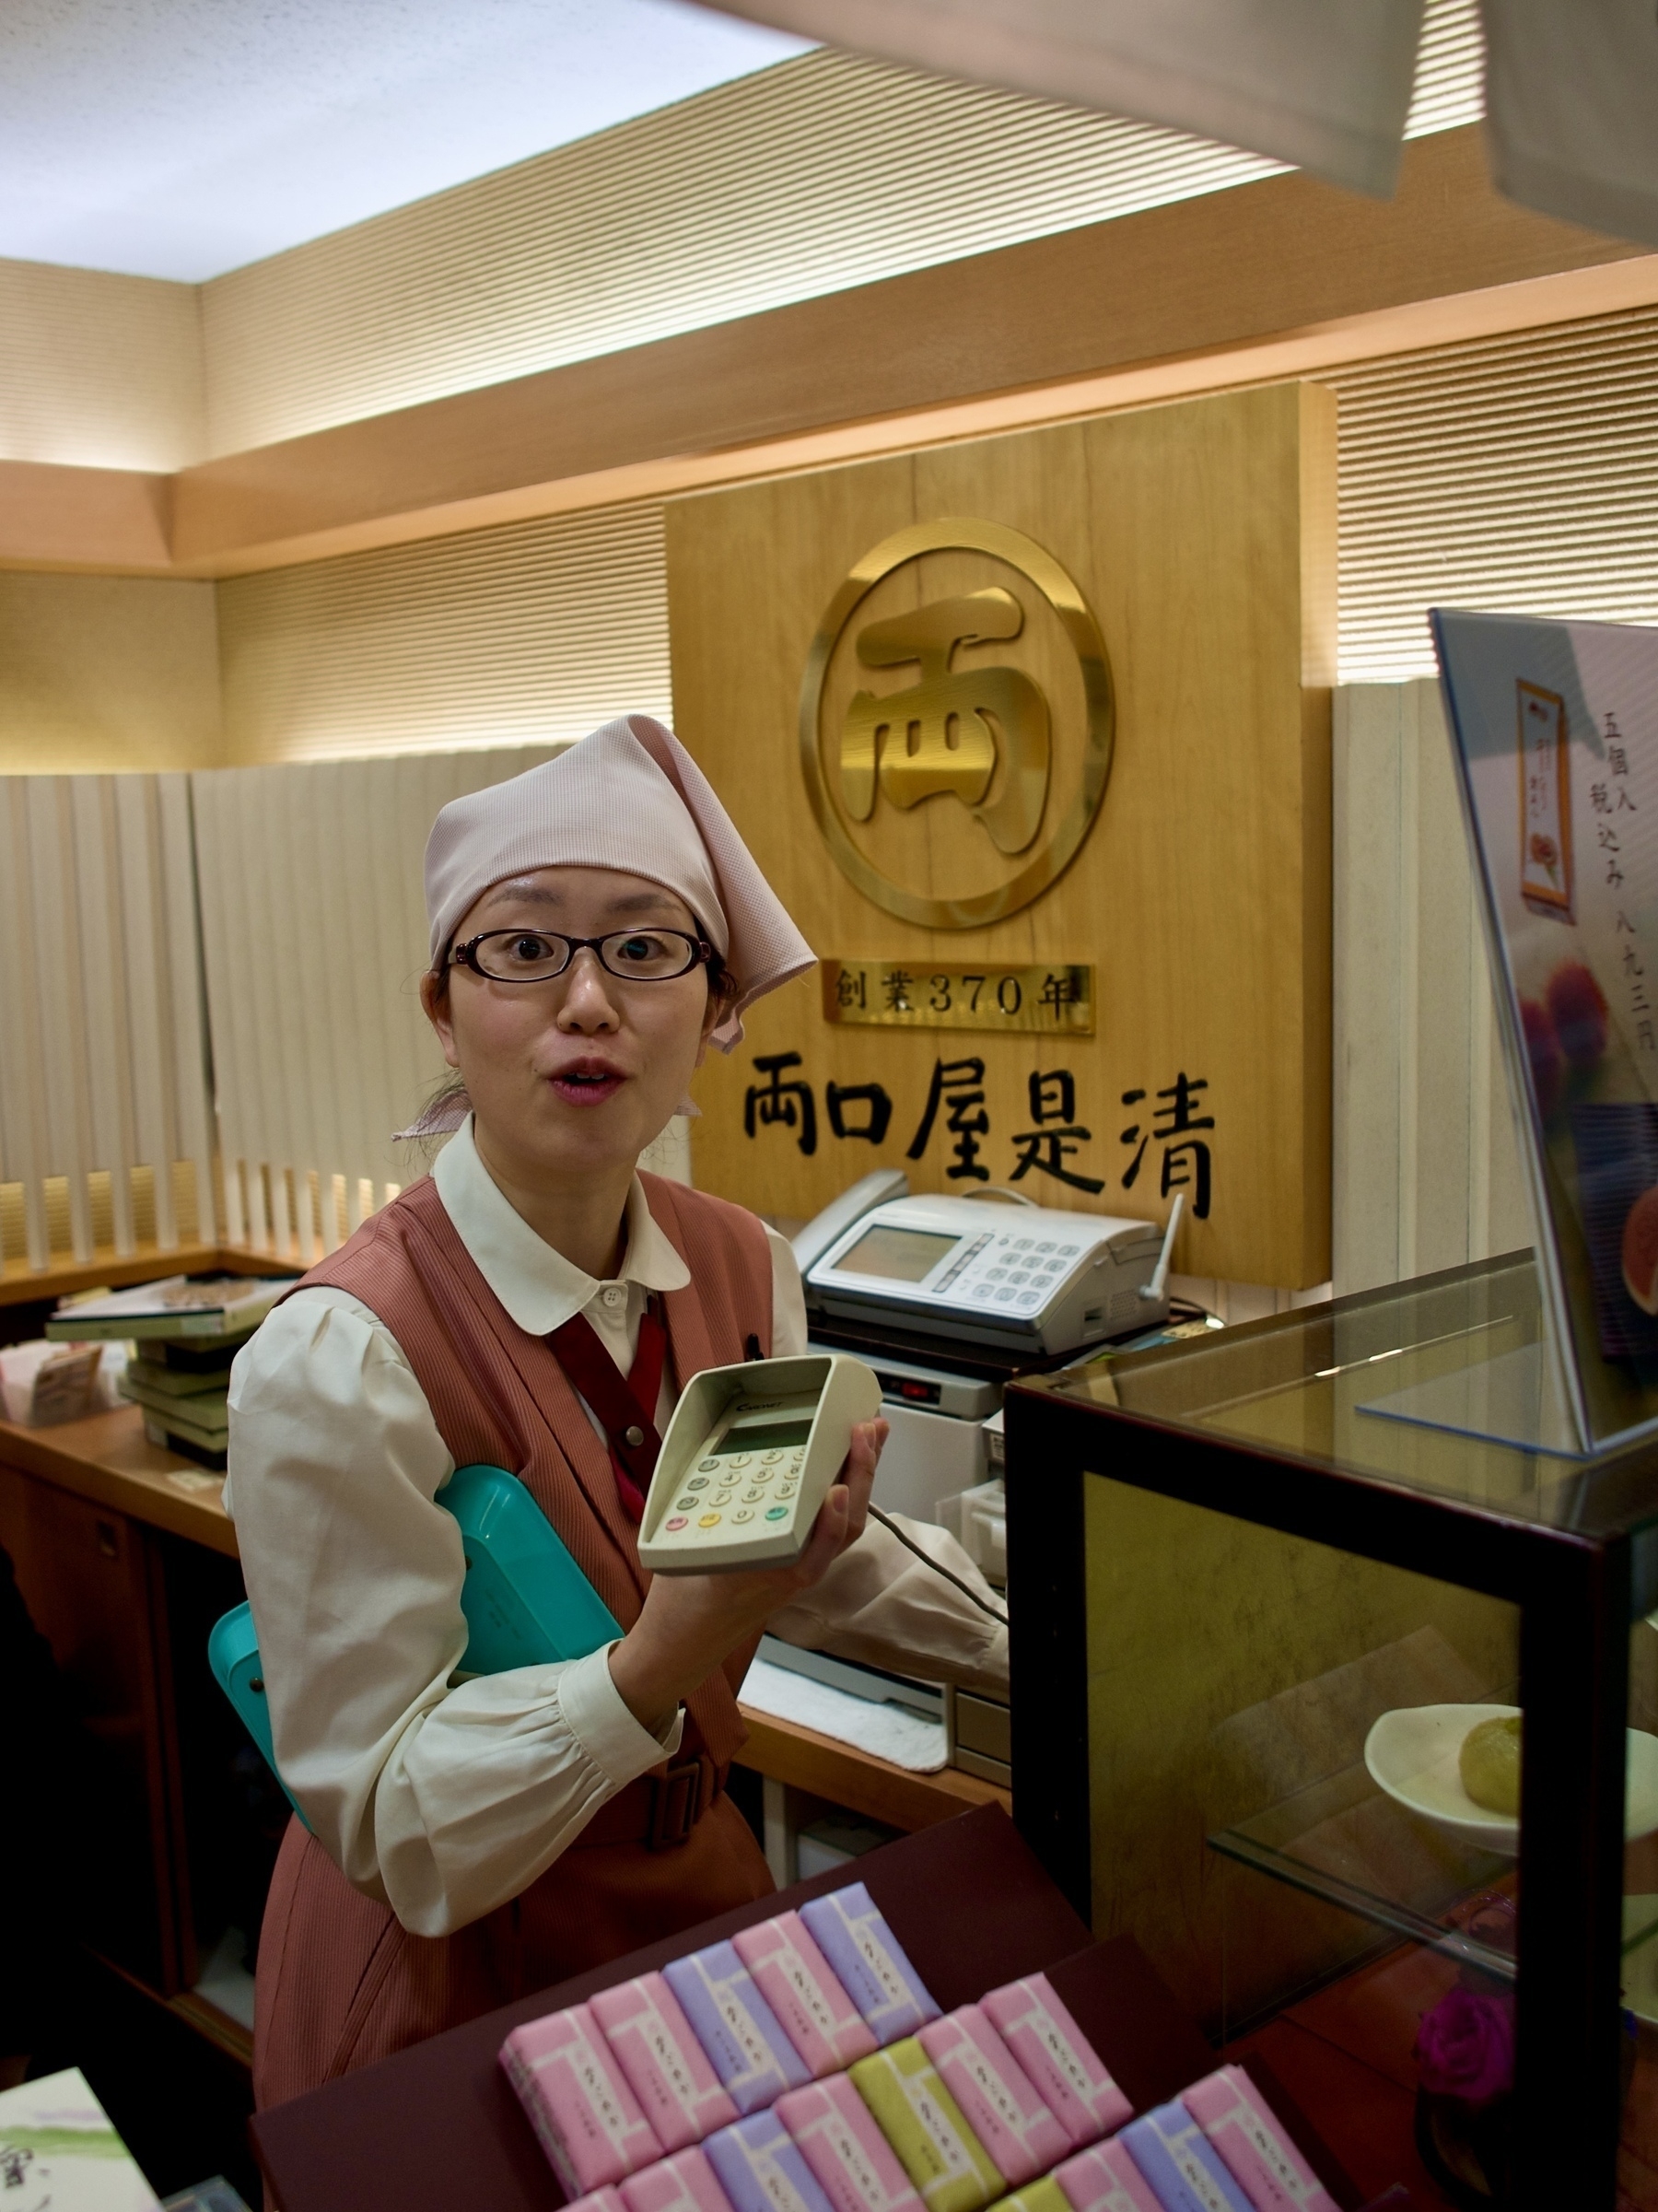 Clerk in salmon pink uniform at Japanese sweets shop handing me a credit card scanner. 